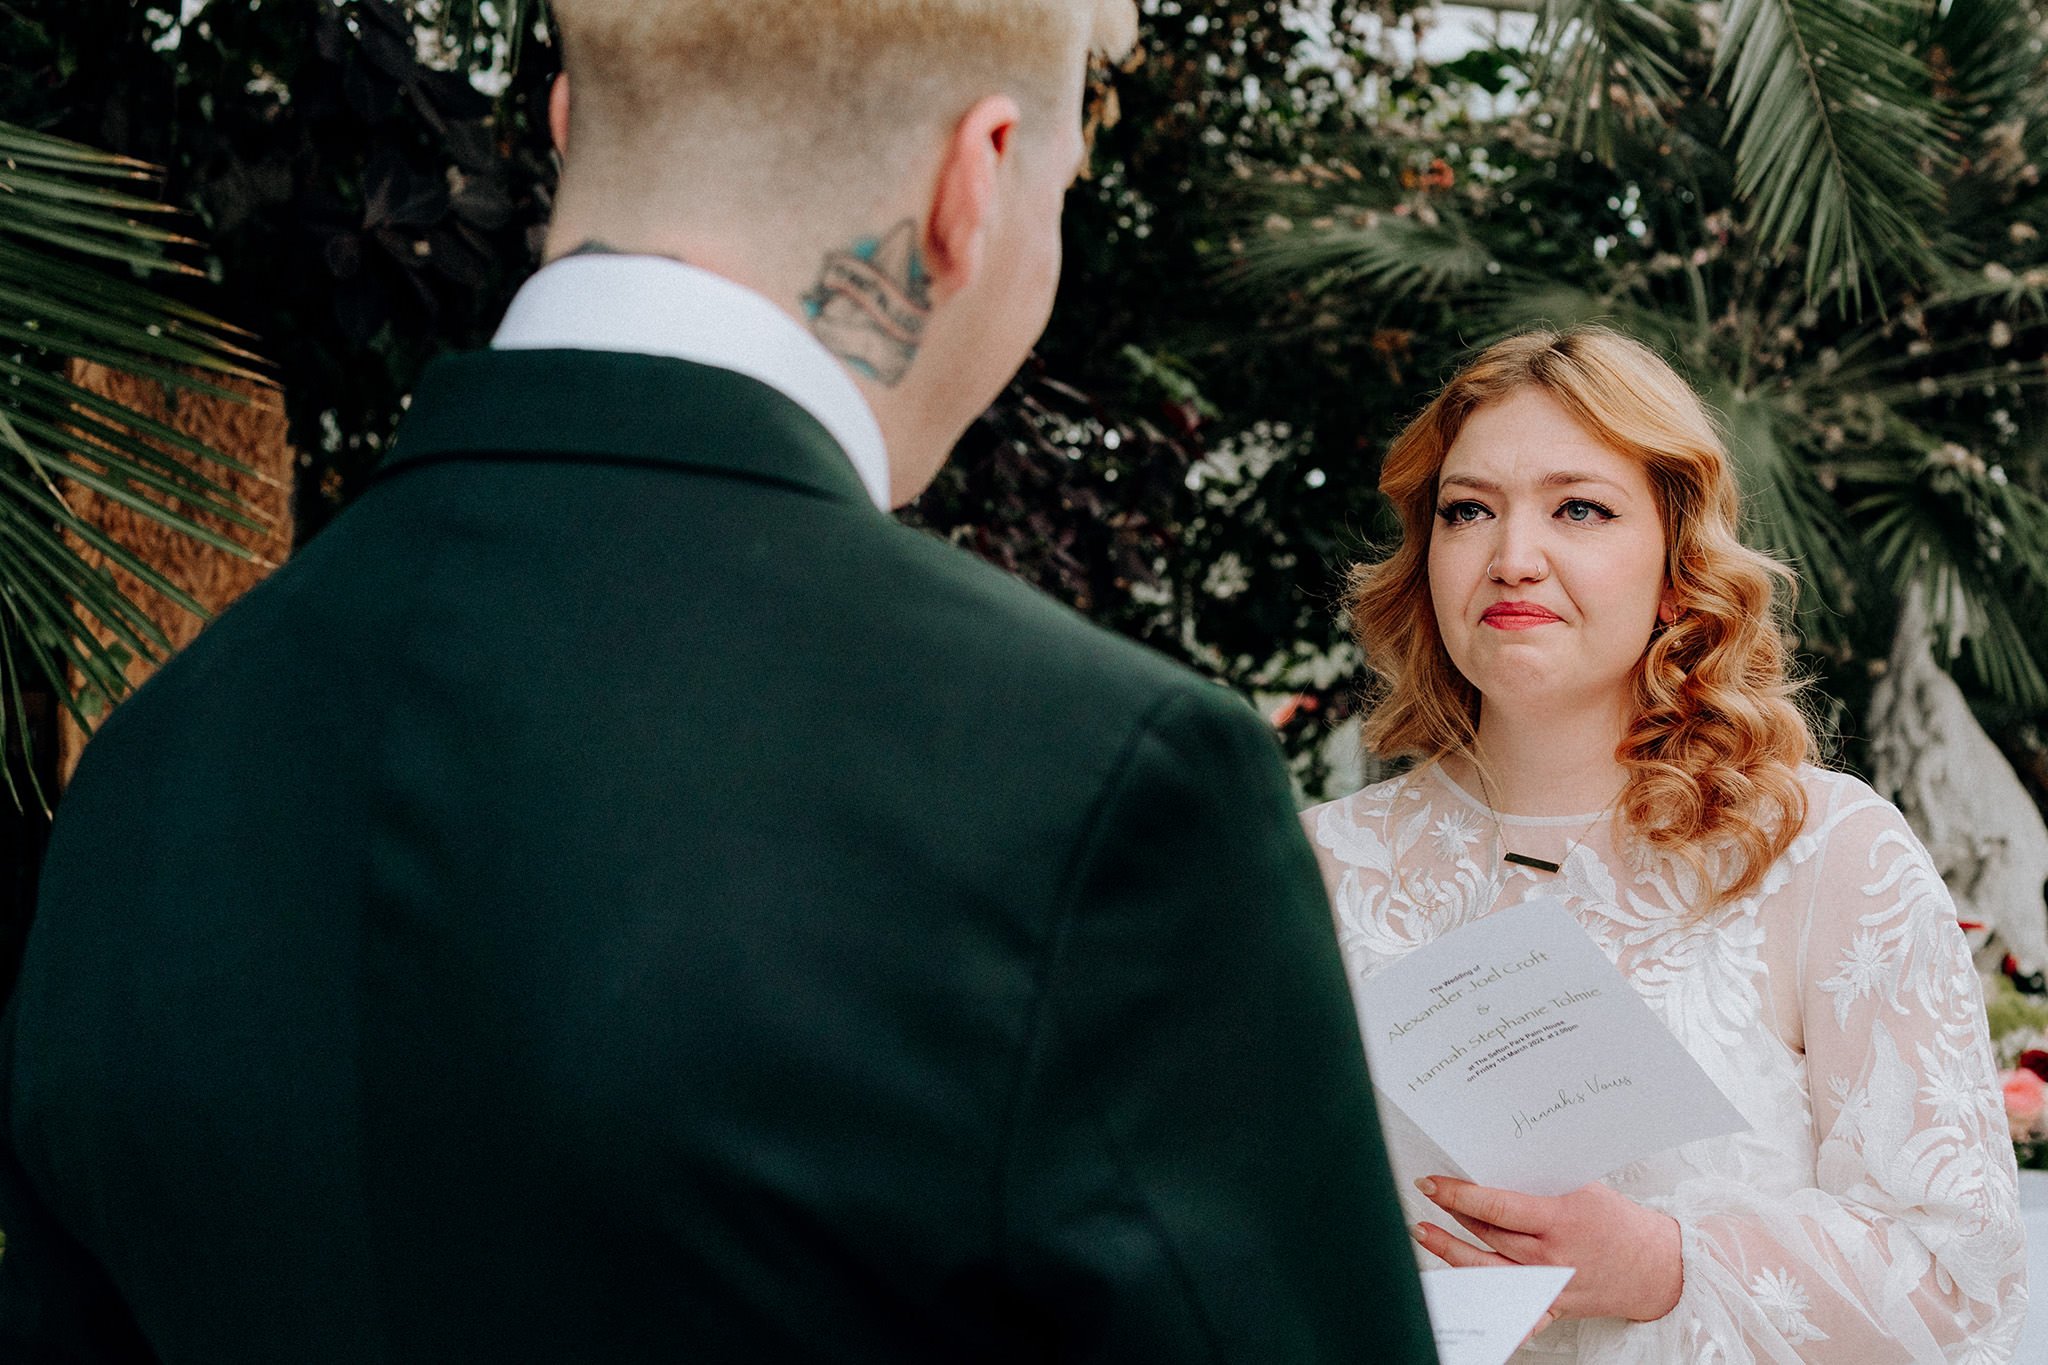 Emotional bride exchanging vows